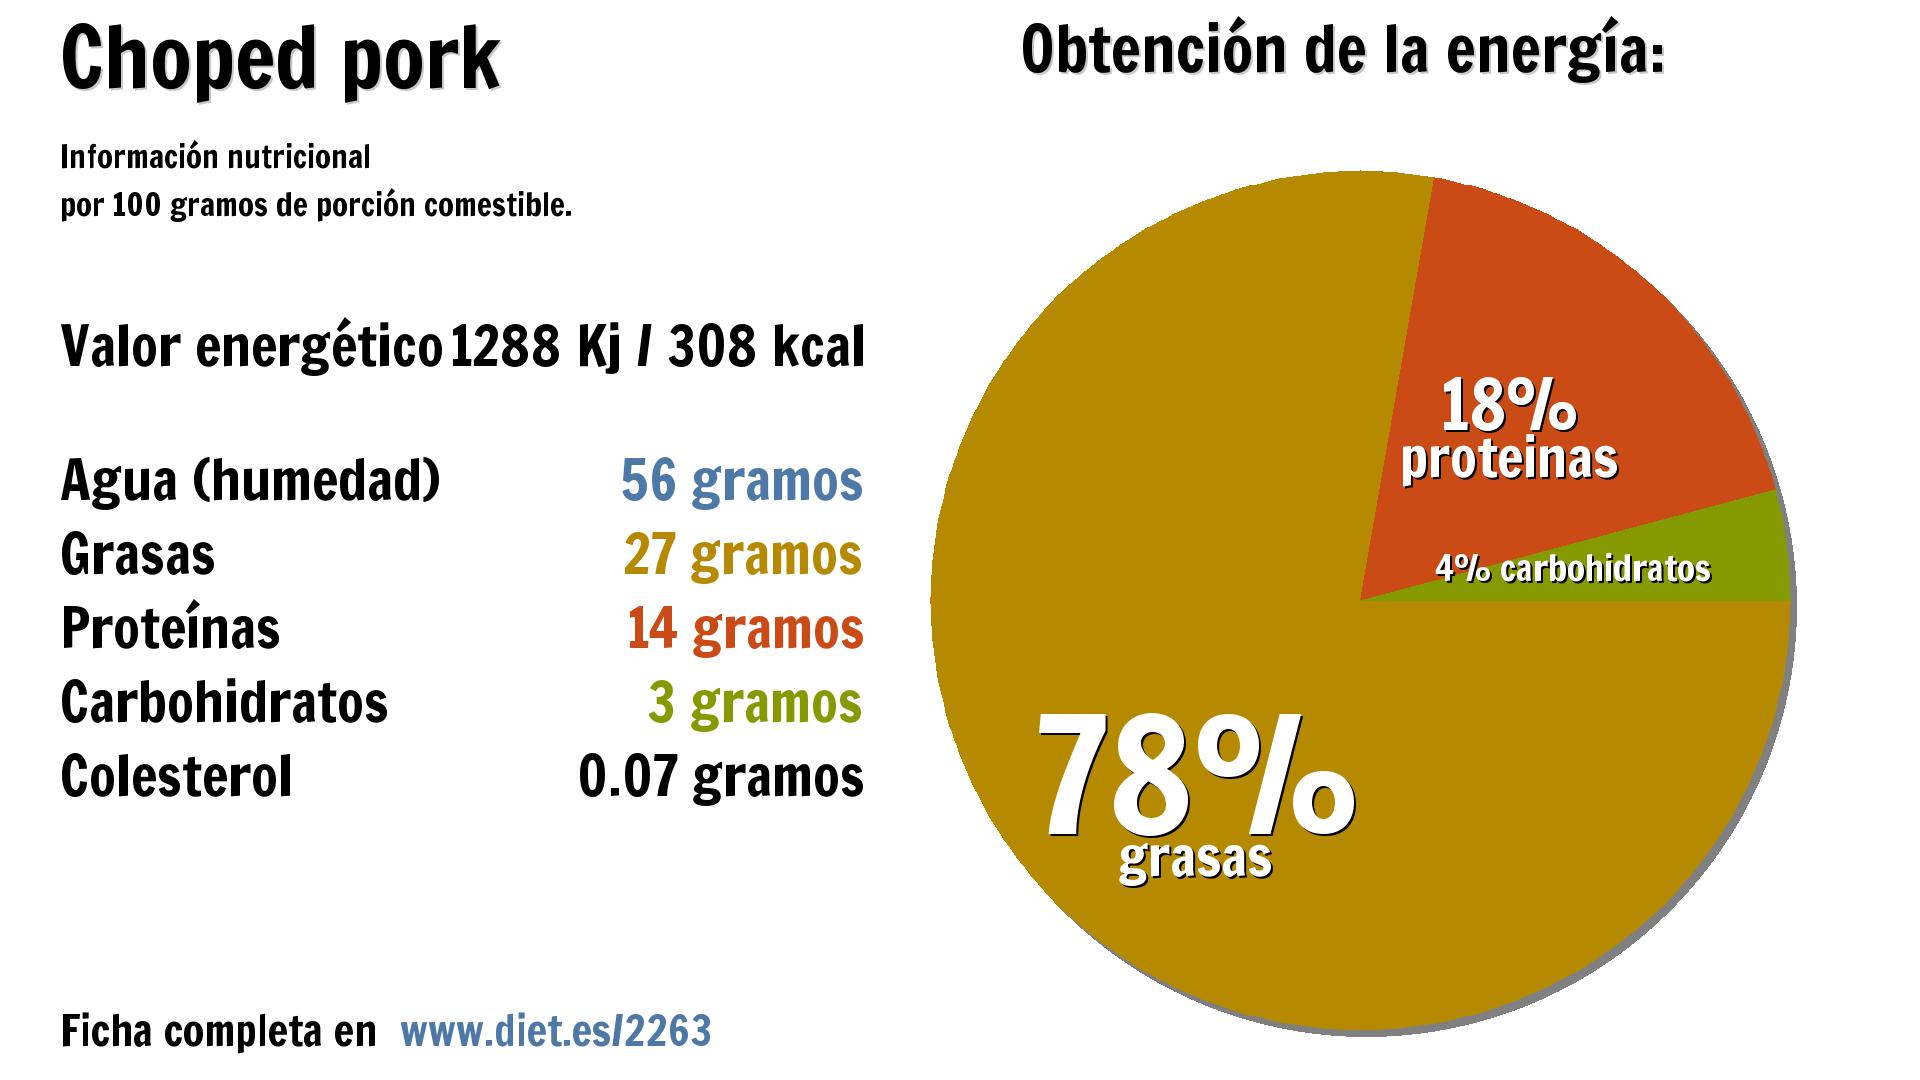 Choped pork: energía 1288 Kj, agua 56 g., grasas 27 g., proteínas 14 g. y carbohidratos 3 g.